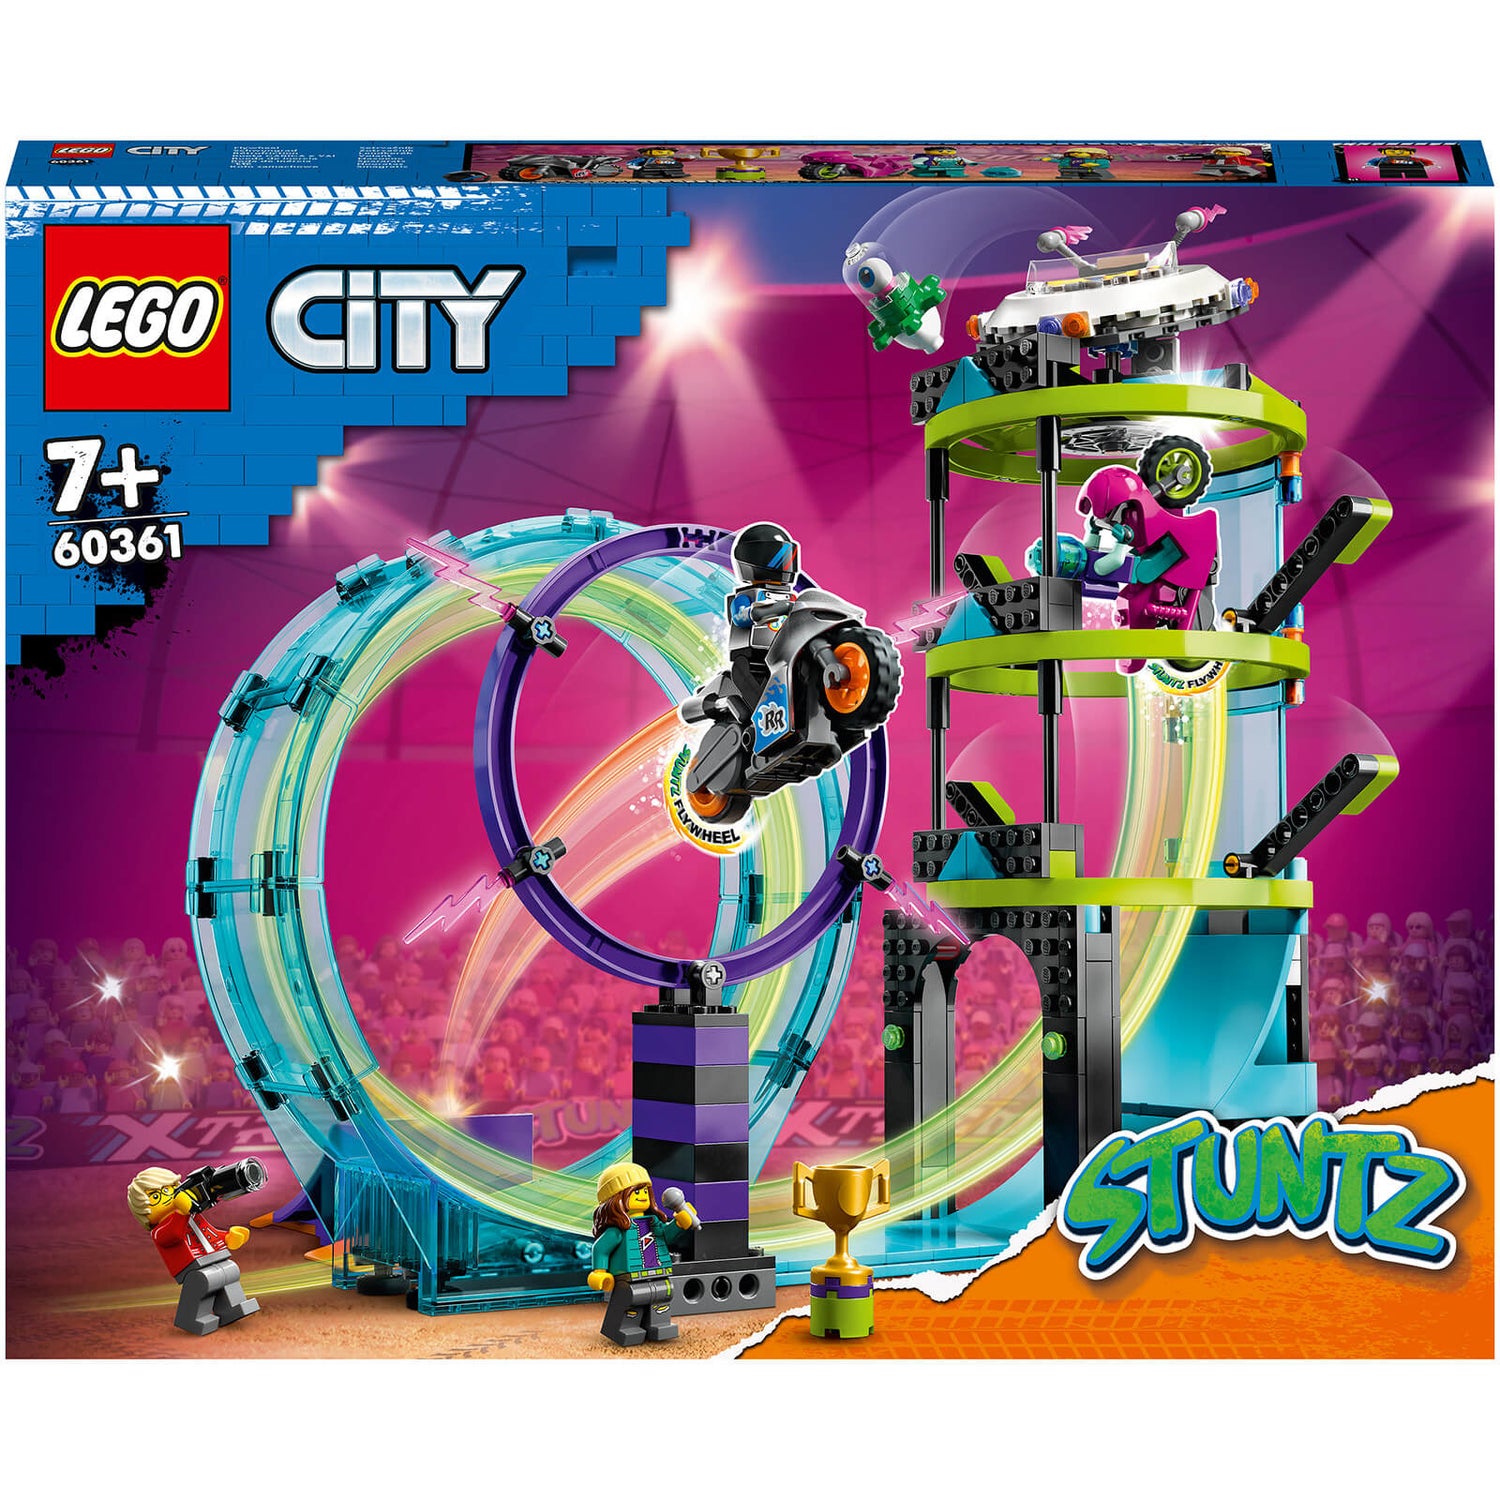 LEGO City: Ultimate Stunt Riders Challenge (60361)